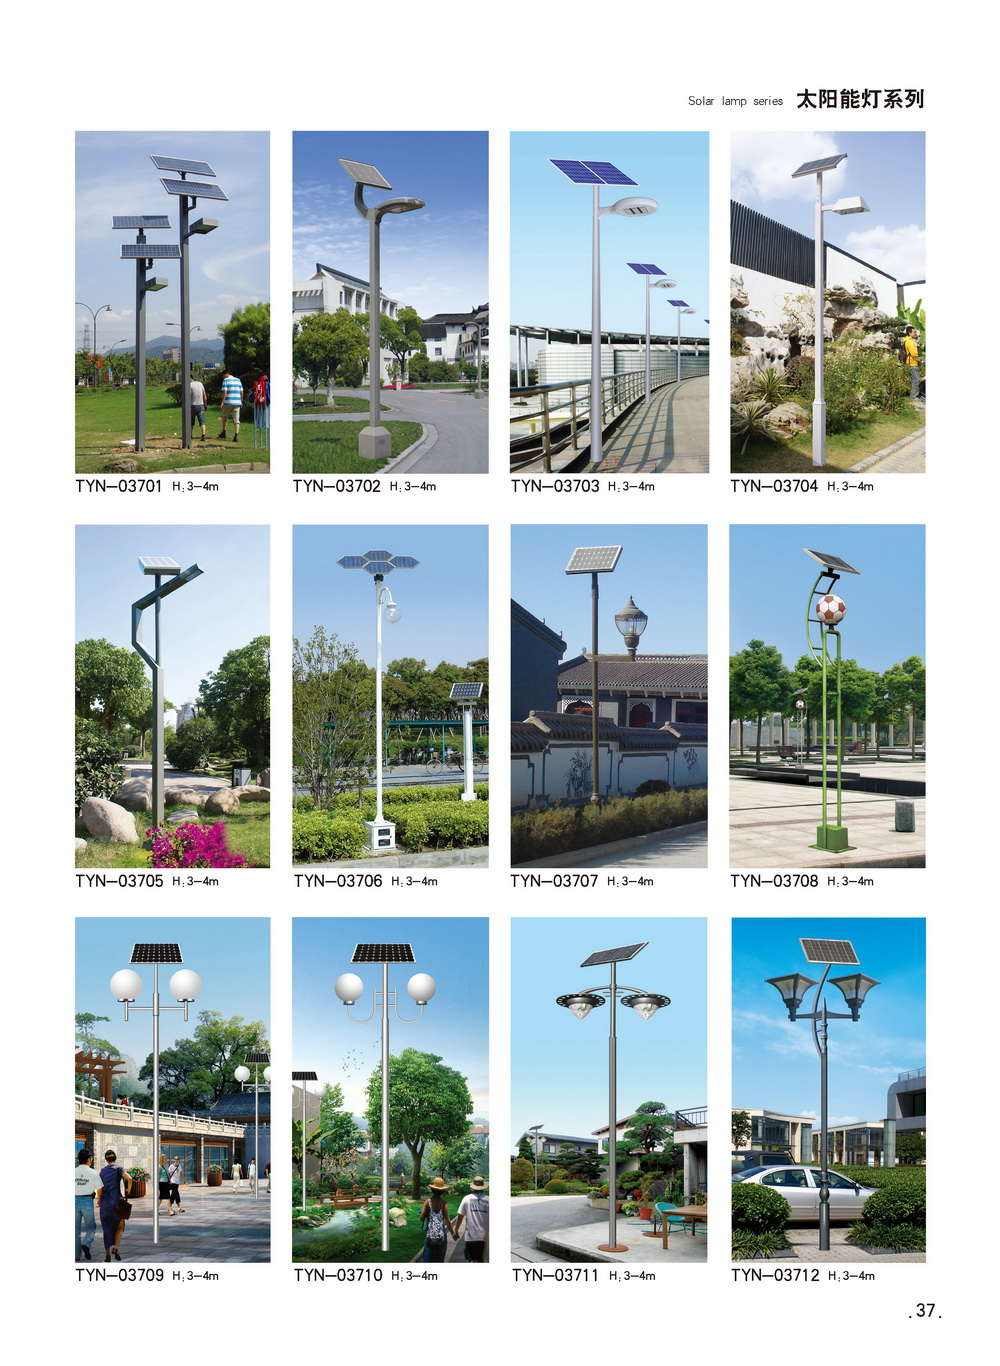 6-meter hot-dip galvanized photovoltaic road lighting lamp for new rural areas - LED solar street lamp